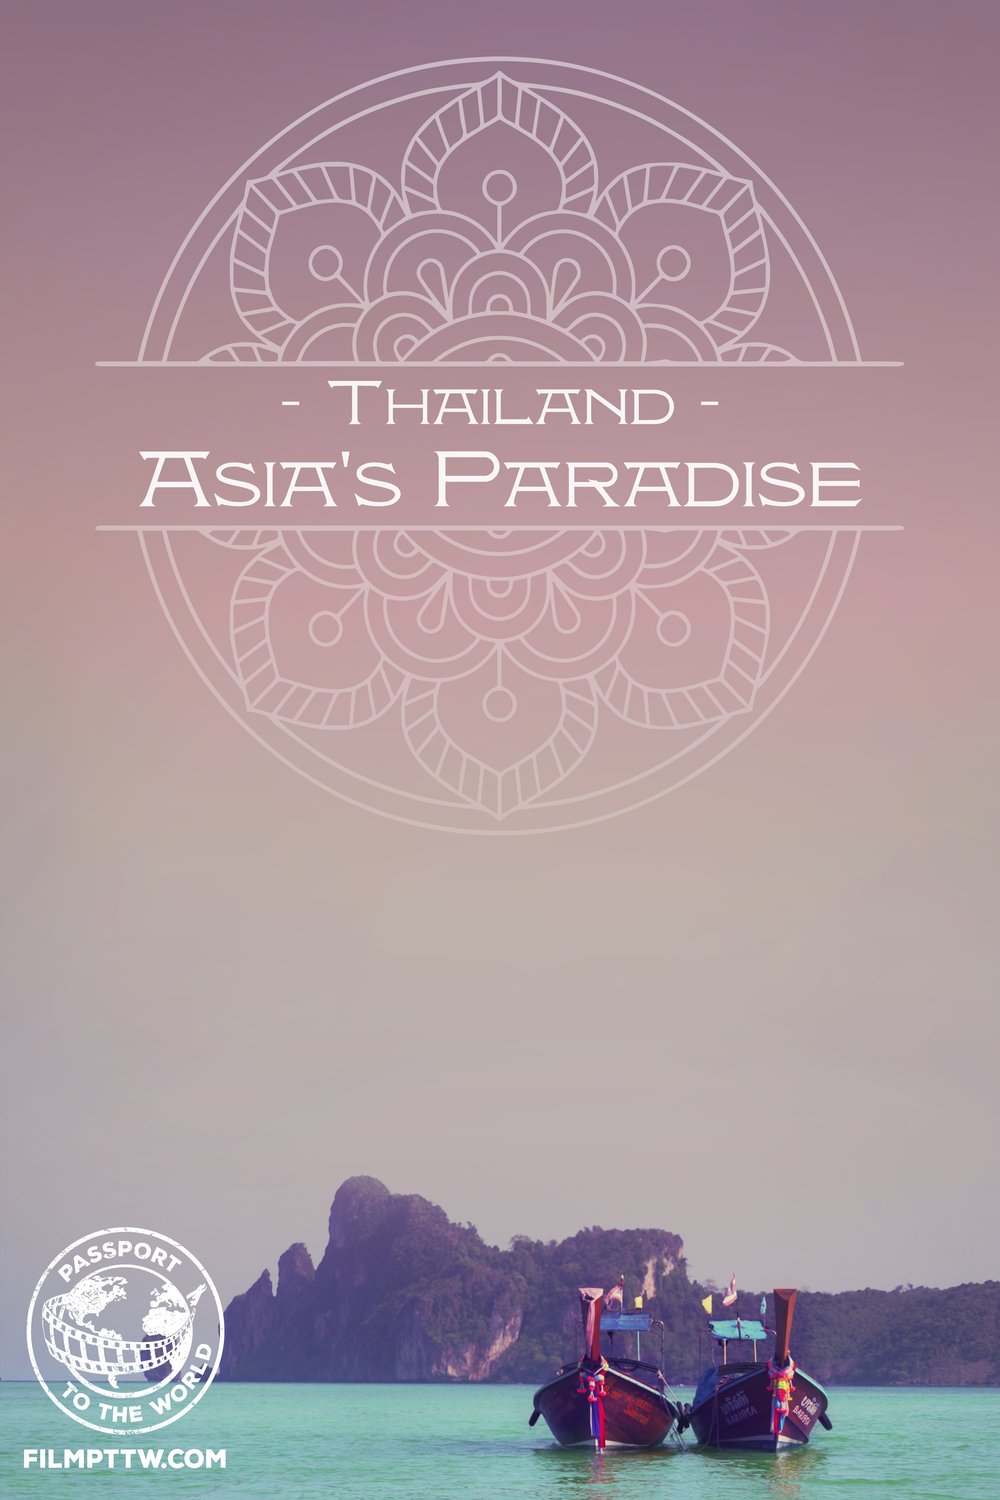 L'affiche du film Passport to the World: Thailand: Asia's Paradise